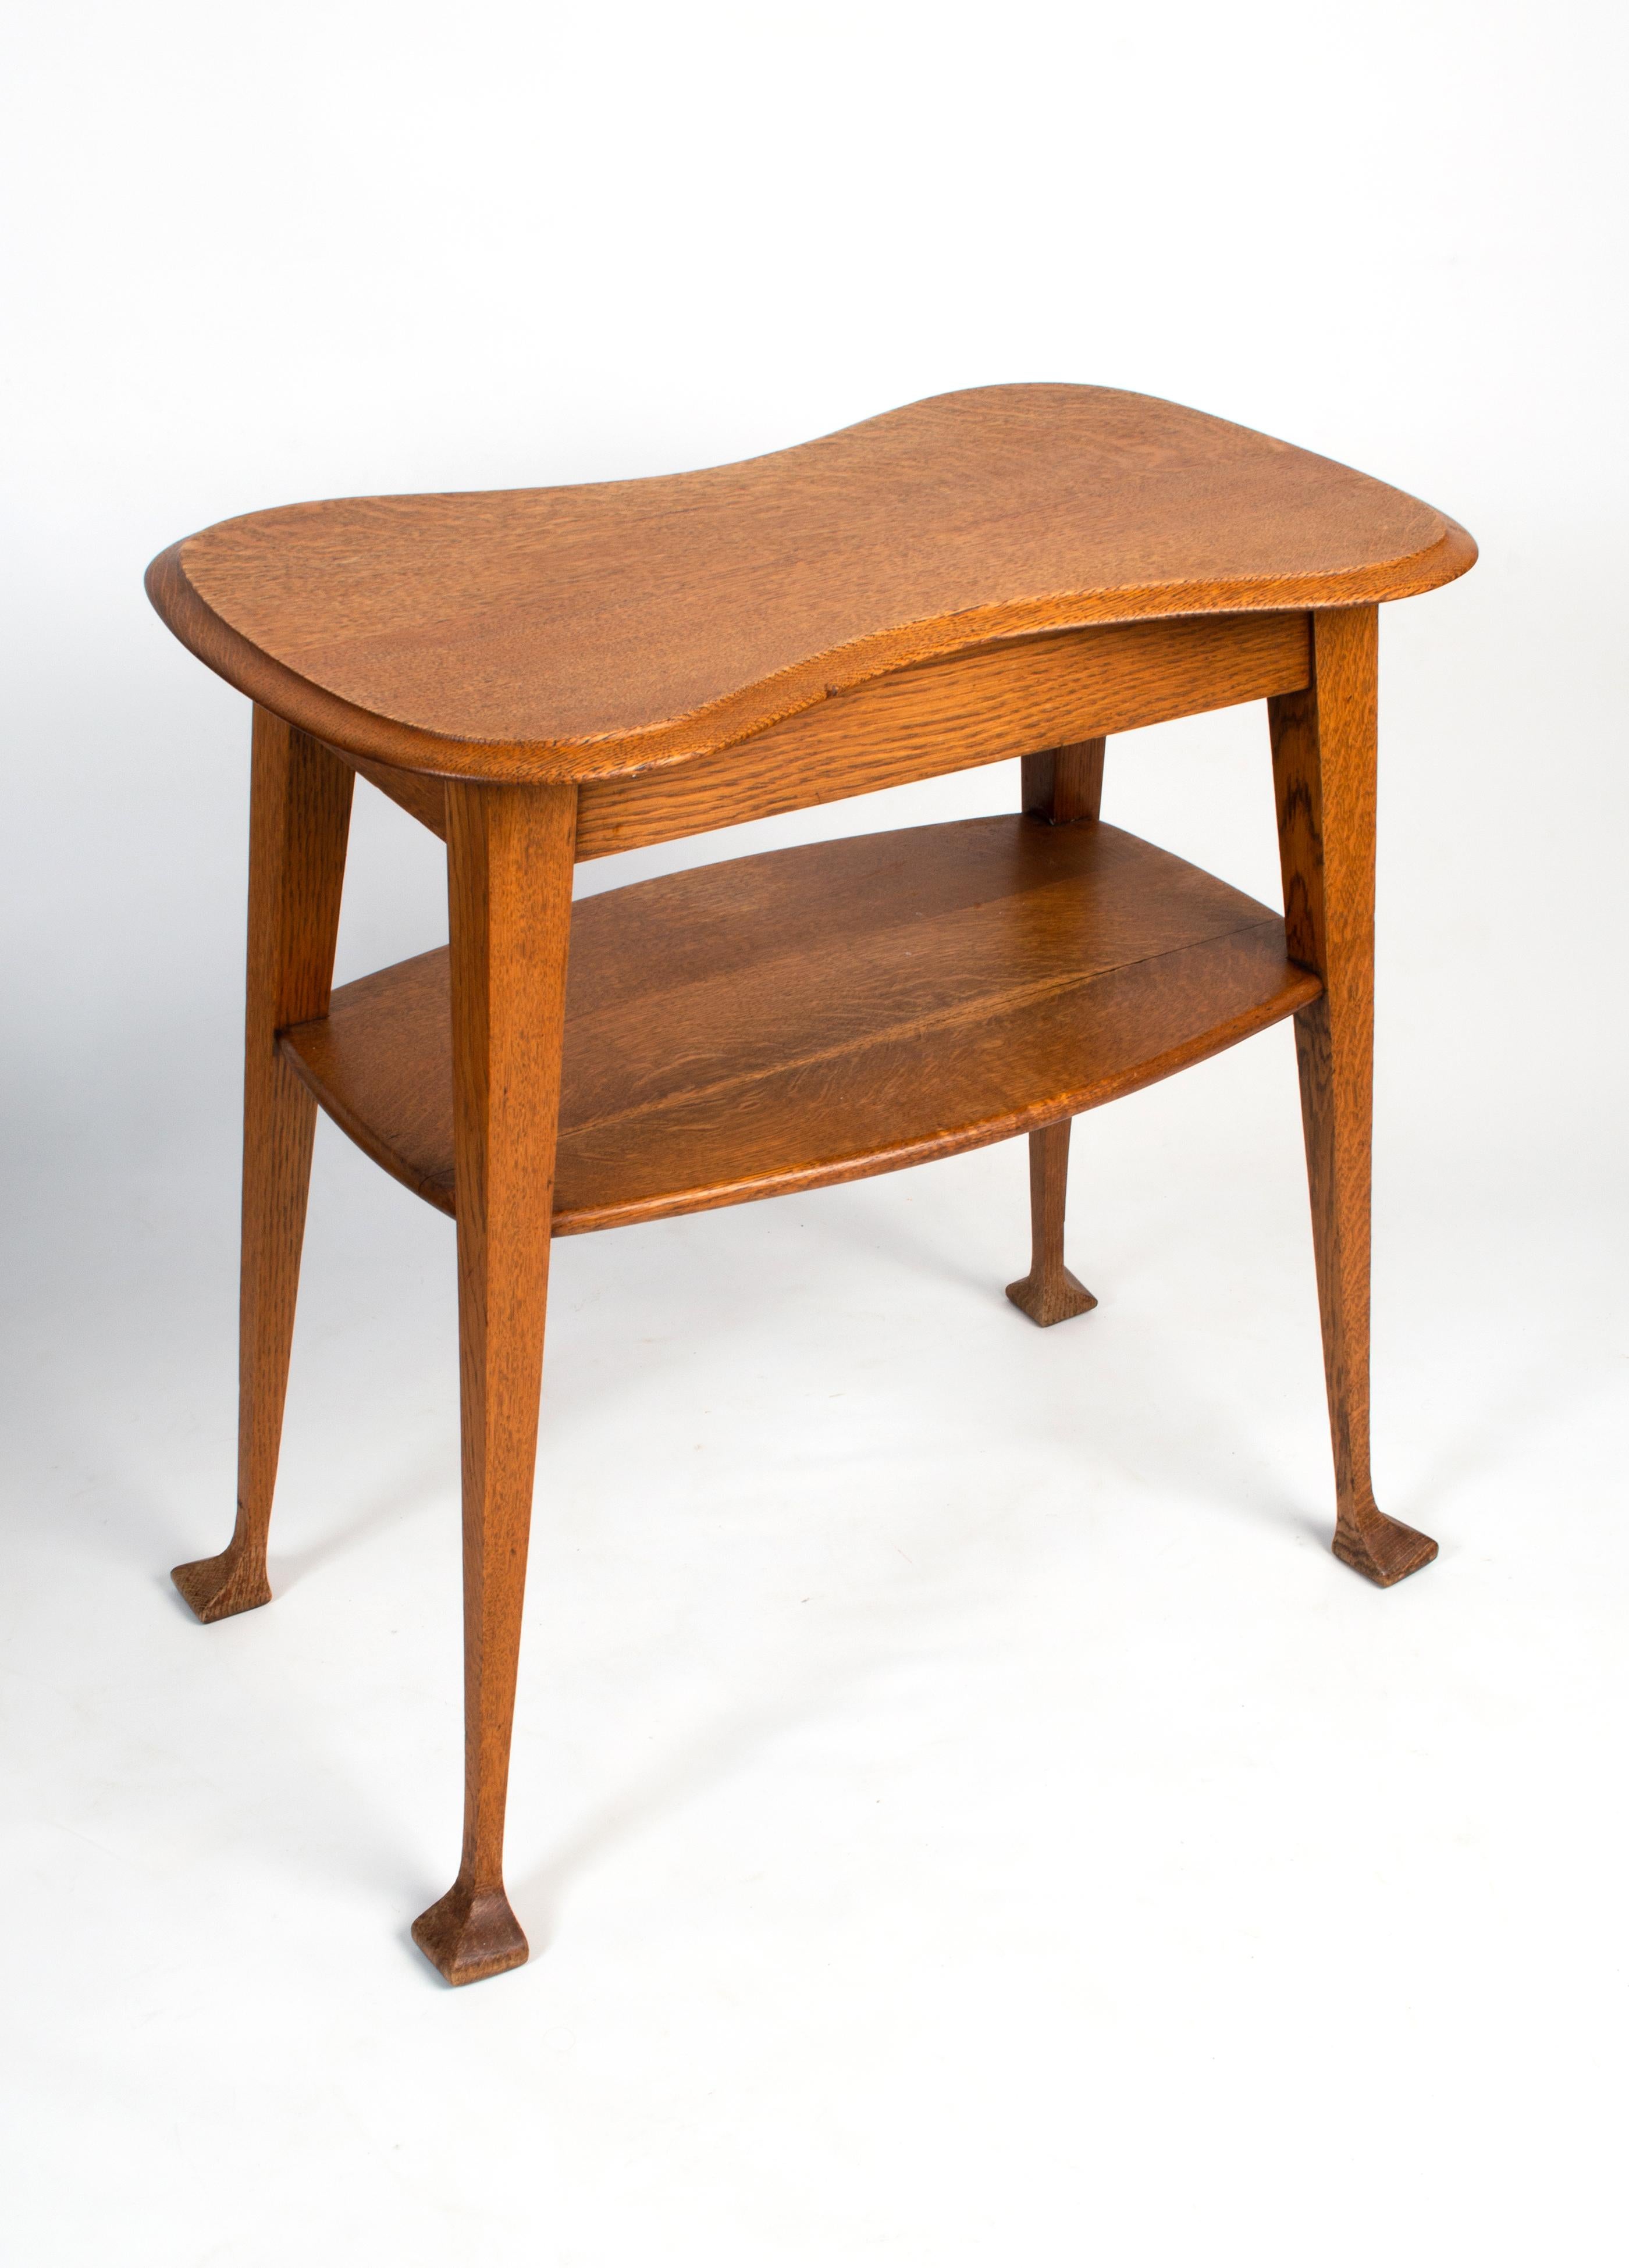 19th Century Antique English Shapland & Petter Arts & Crafts Golden Oak Side Table C.1890 For Sale